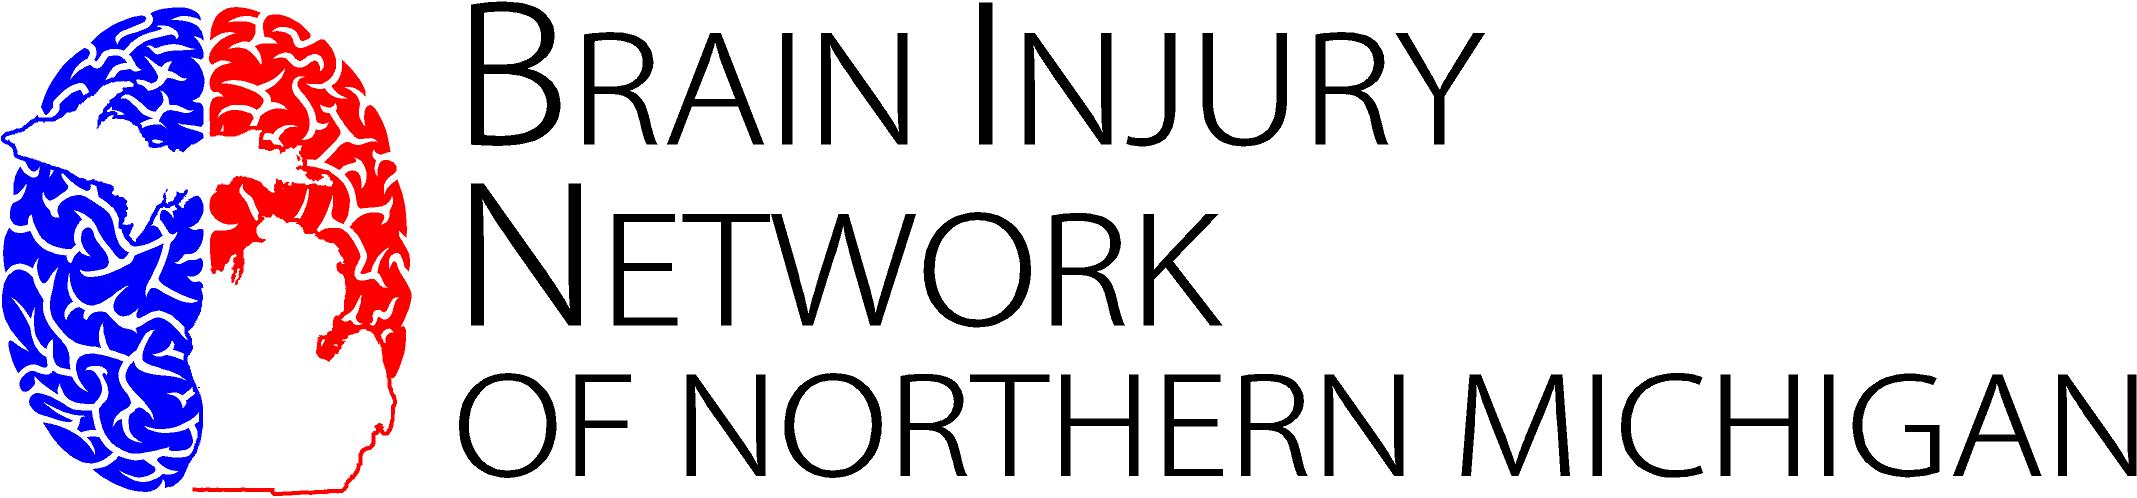 brain injury of northern michigan logo 